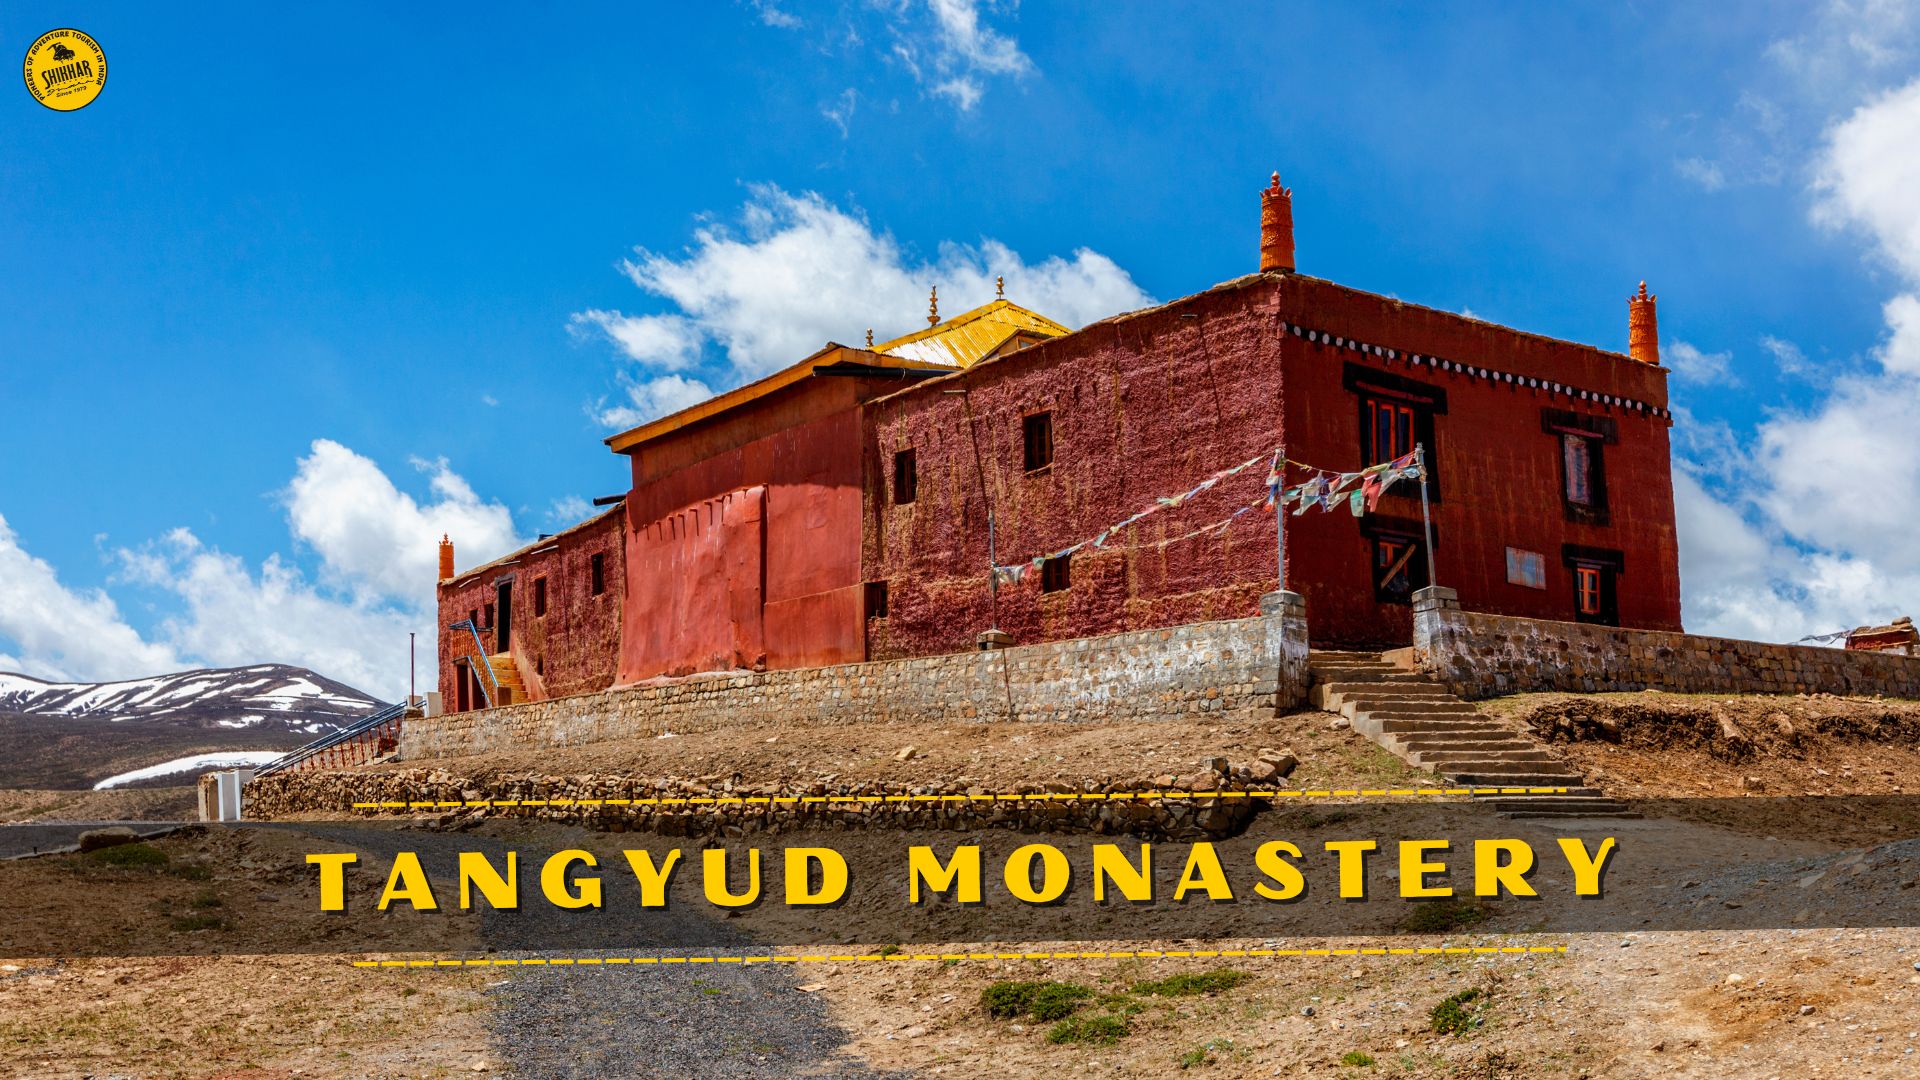 Tangud Monastery